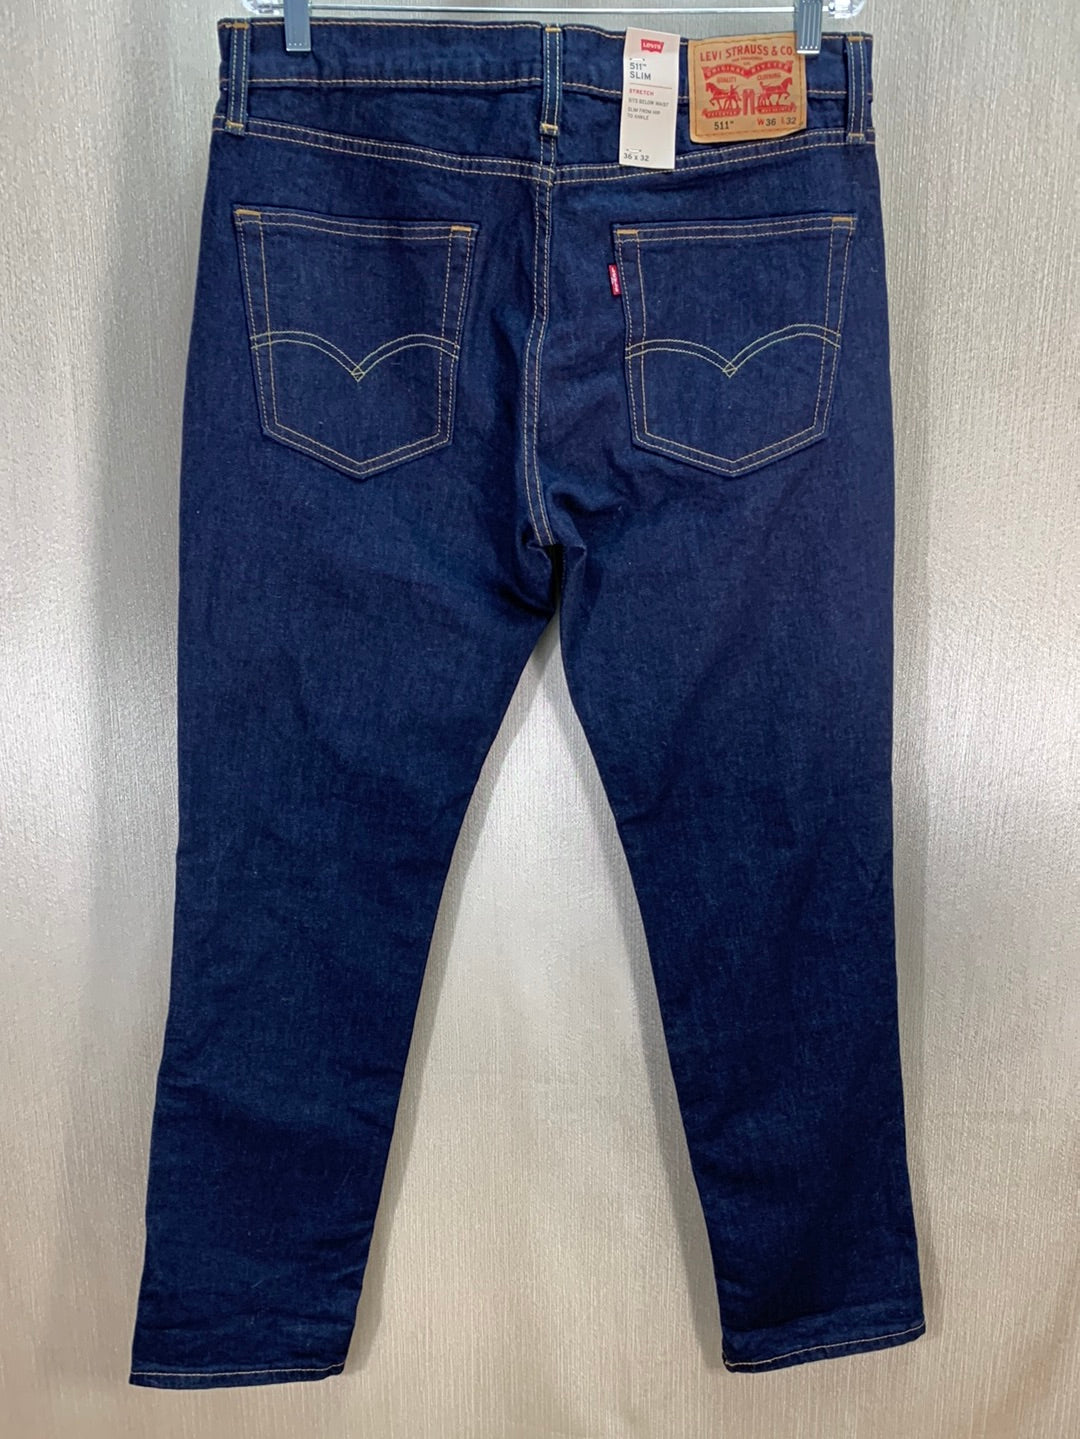 NWT - LEVI'S dark hollow dark wash Stretch 511 Slim Fit Jeans - 36x32